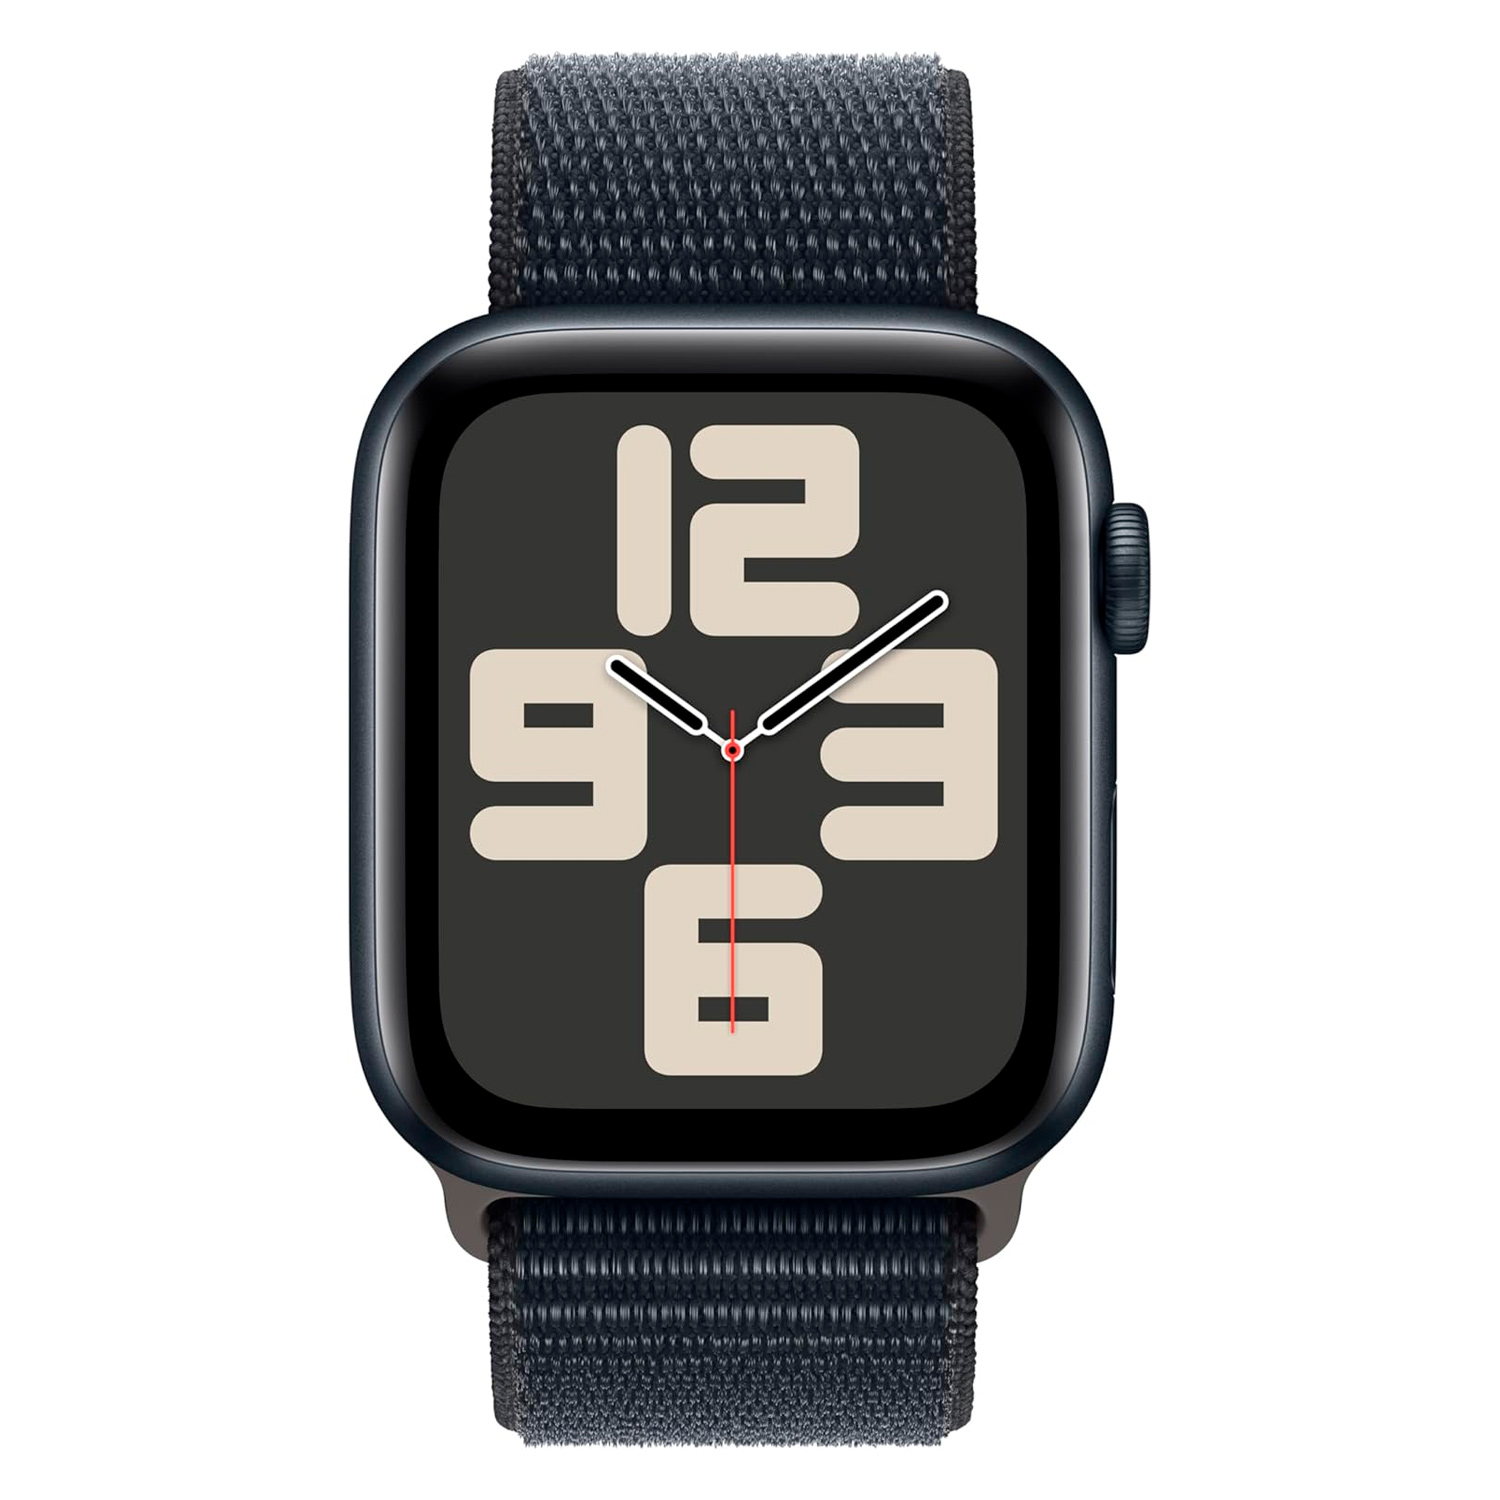 Apple Watch SE 2 MREA3LL/A Caixa Alumínio 44mm Meia Noite - Loop Esportiva Meia Noite (Caixa Danificada)
